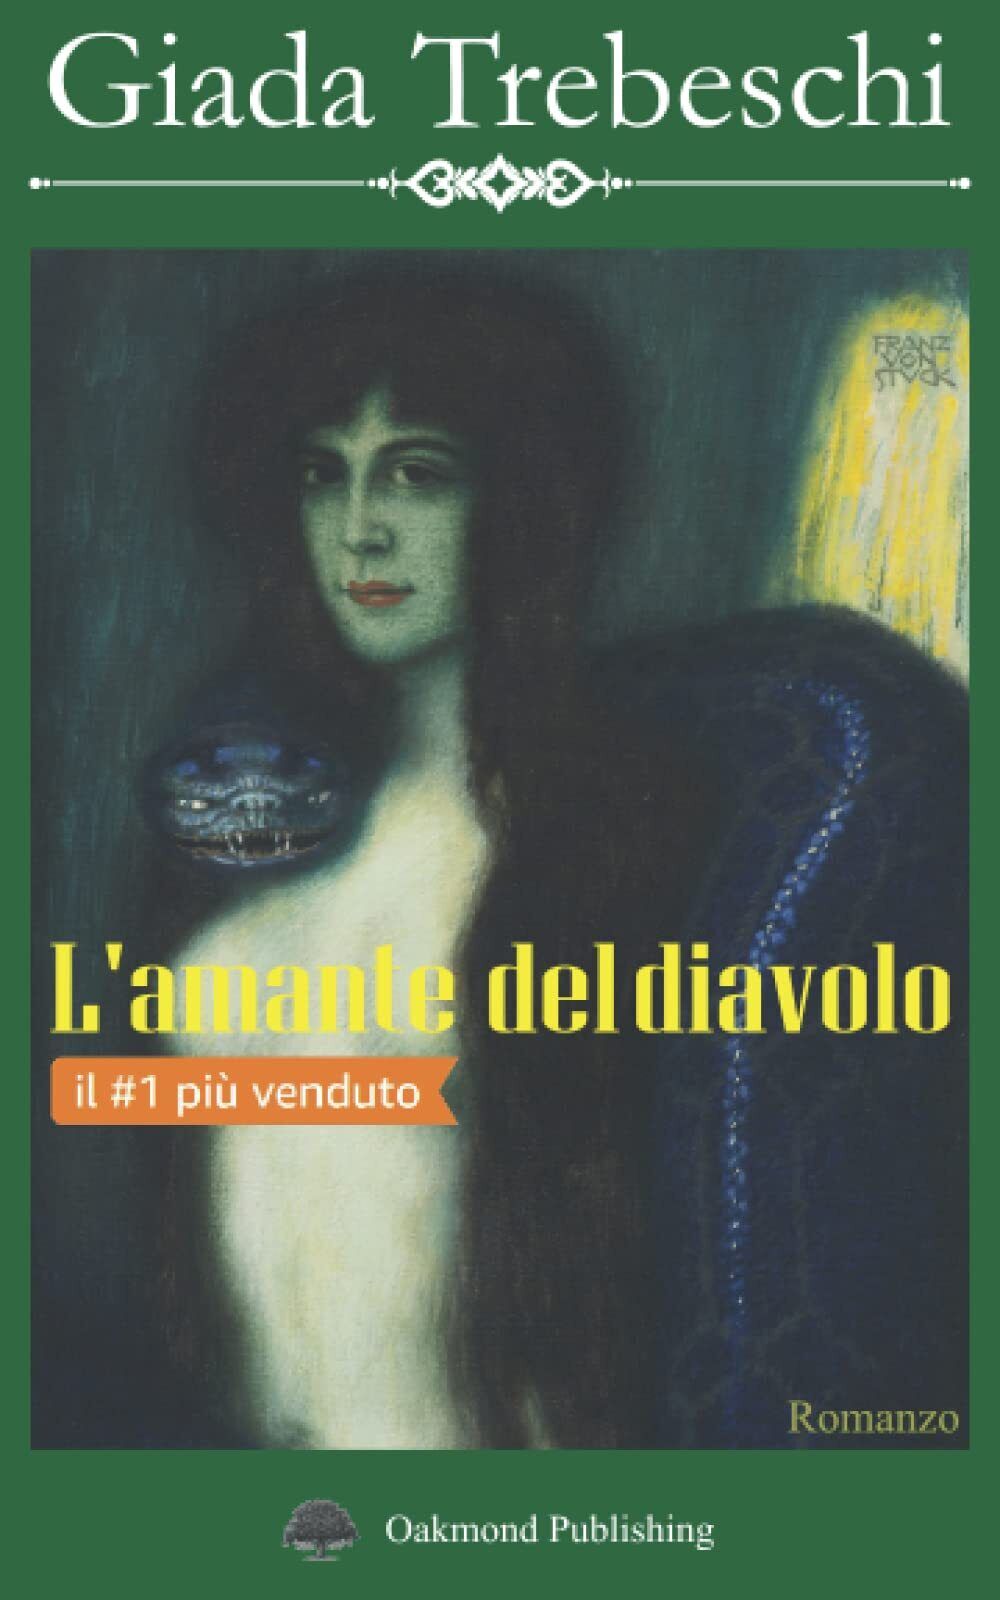 L'amante del diavolo - Giada Trebeschi - Oakmond Publishing, 2019